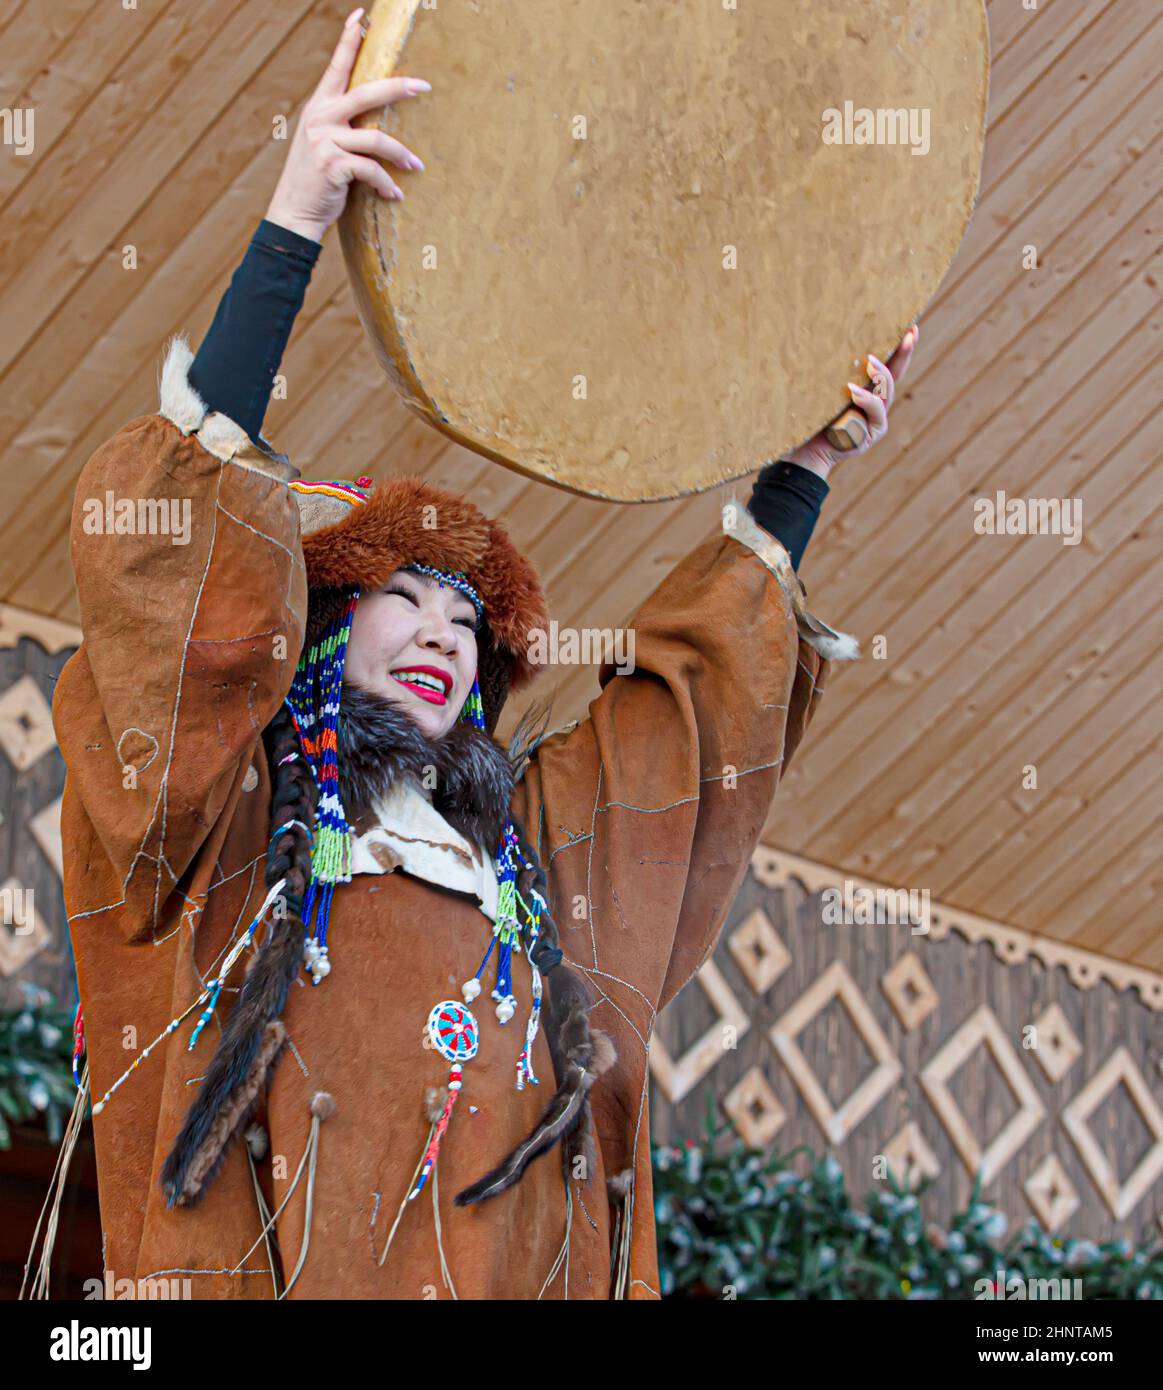 Folk ensemble performance in dress of indigenous people of Kamchatka. The holiday Northern aboriginal Koryak Stock Photo